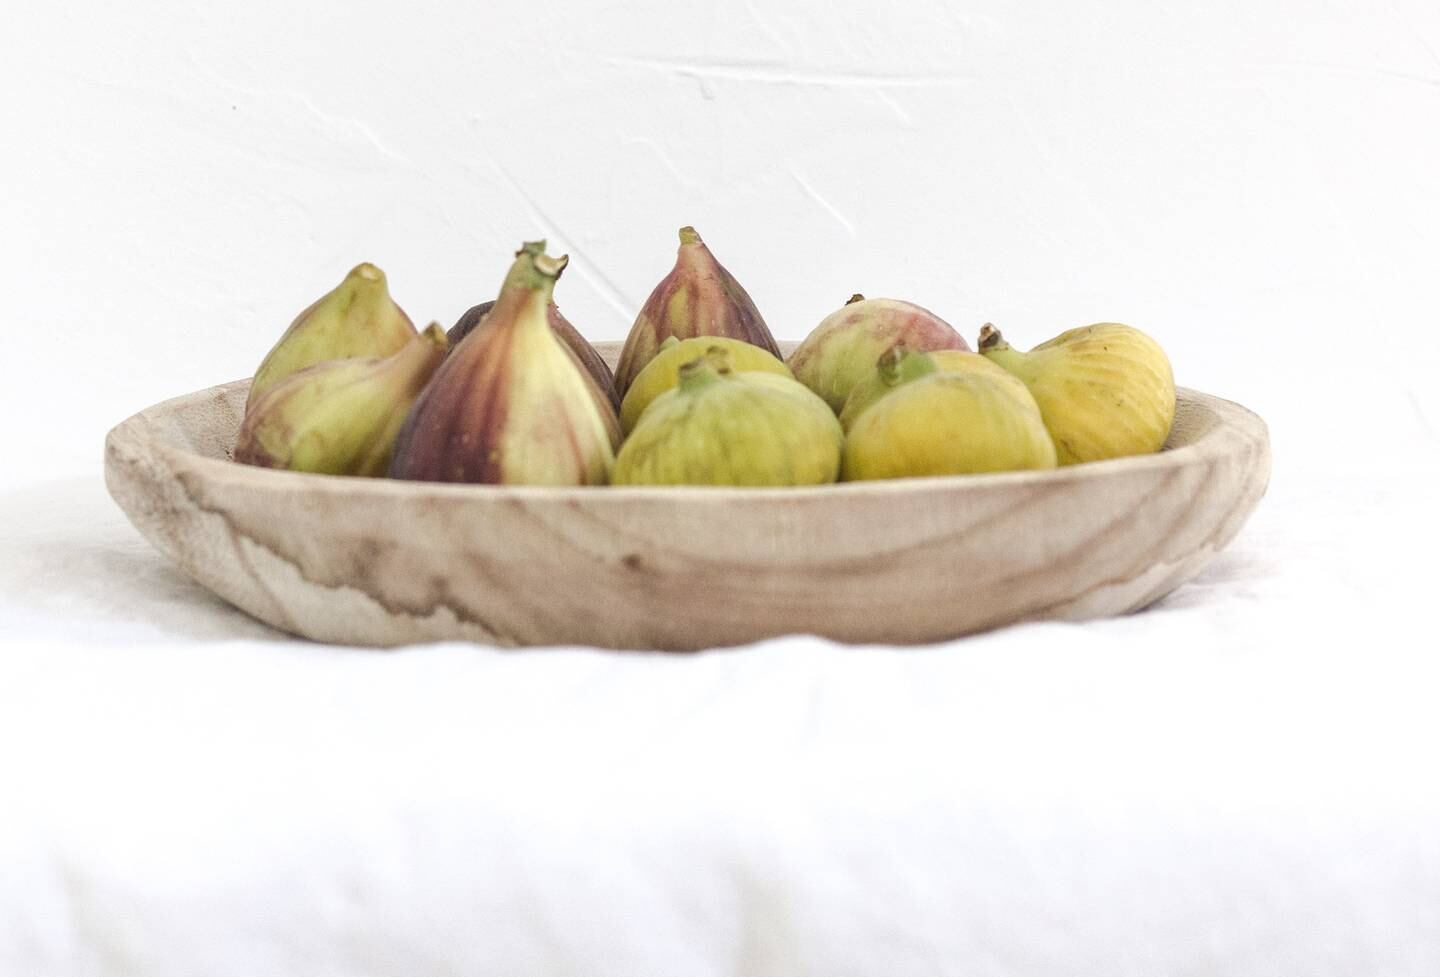 Figs offer depth to savoury dishes, bringing sweetness and sourness. Photo: Unsplash / Rezel Apacionado